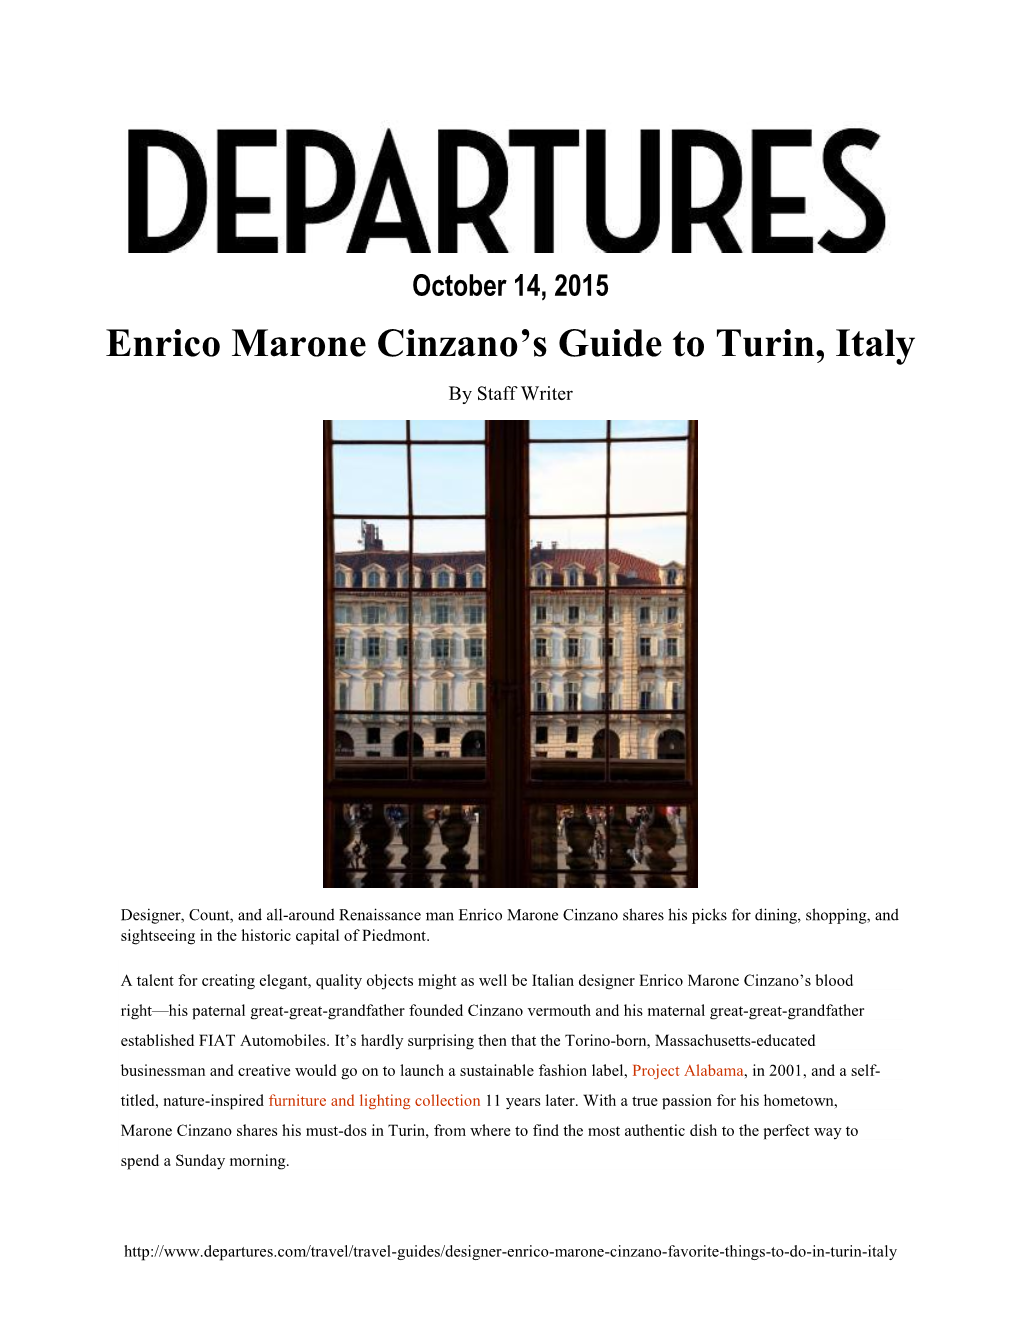 Enrico Marone Cinzano's Guide to Turin, Italy